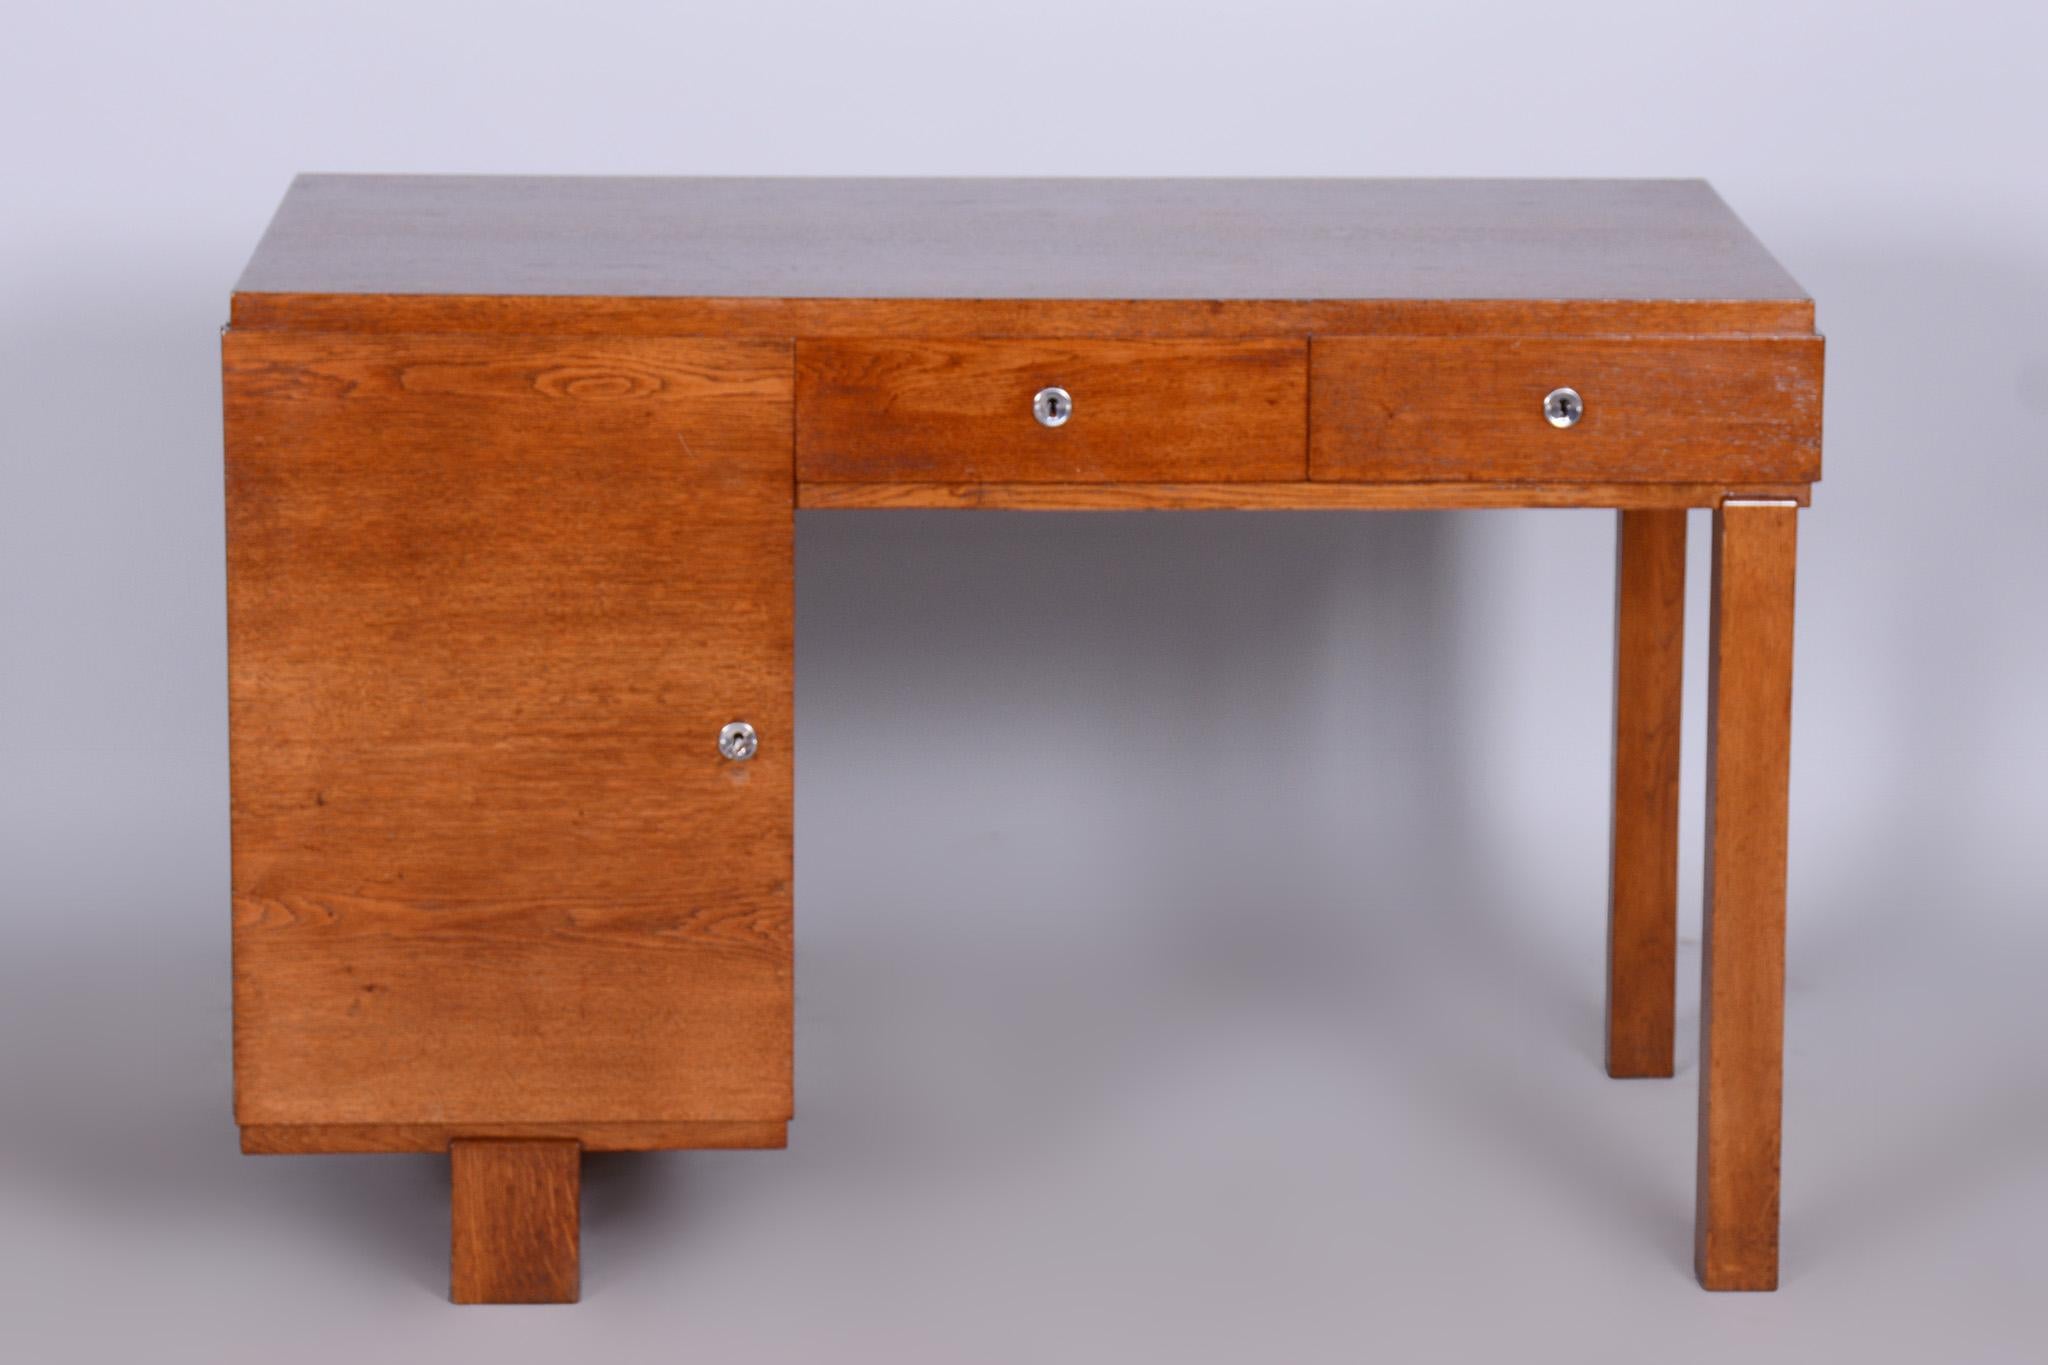 Czech Art Deco oak writing desk made in the 1930s, restored

Revived polish.

Leg space:
height: 62.5 cm (24.6 in)
width: 71.5 cm (28.1 in)